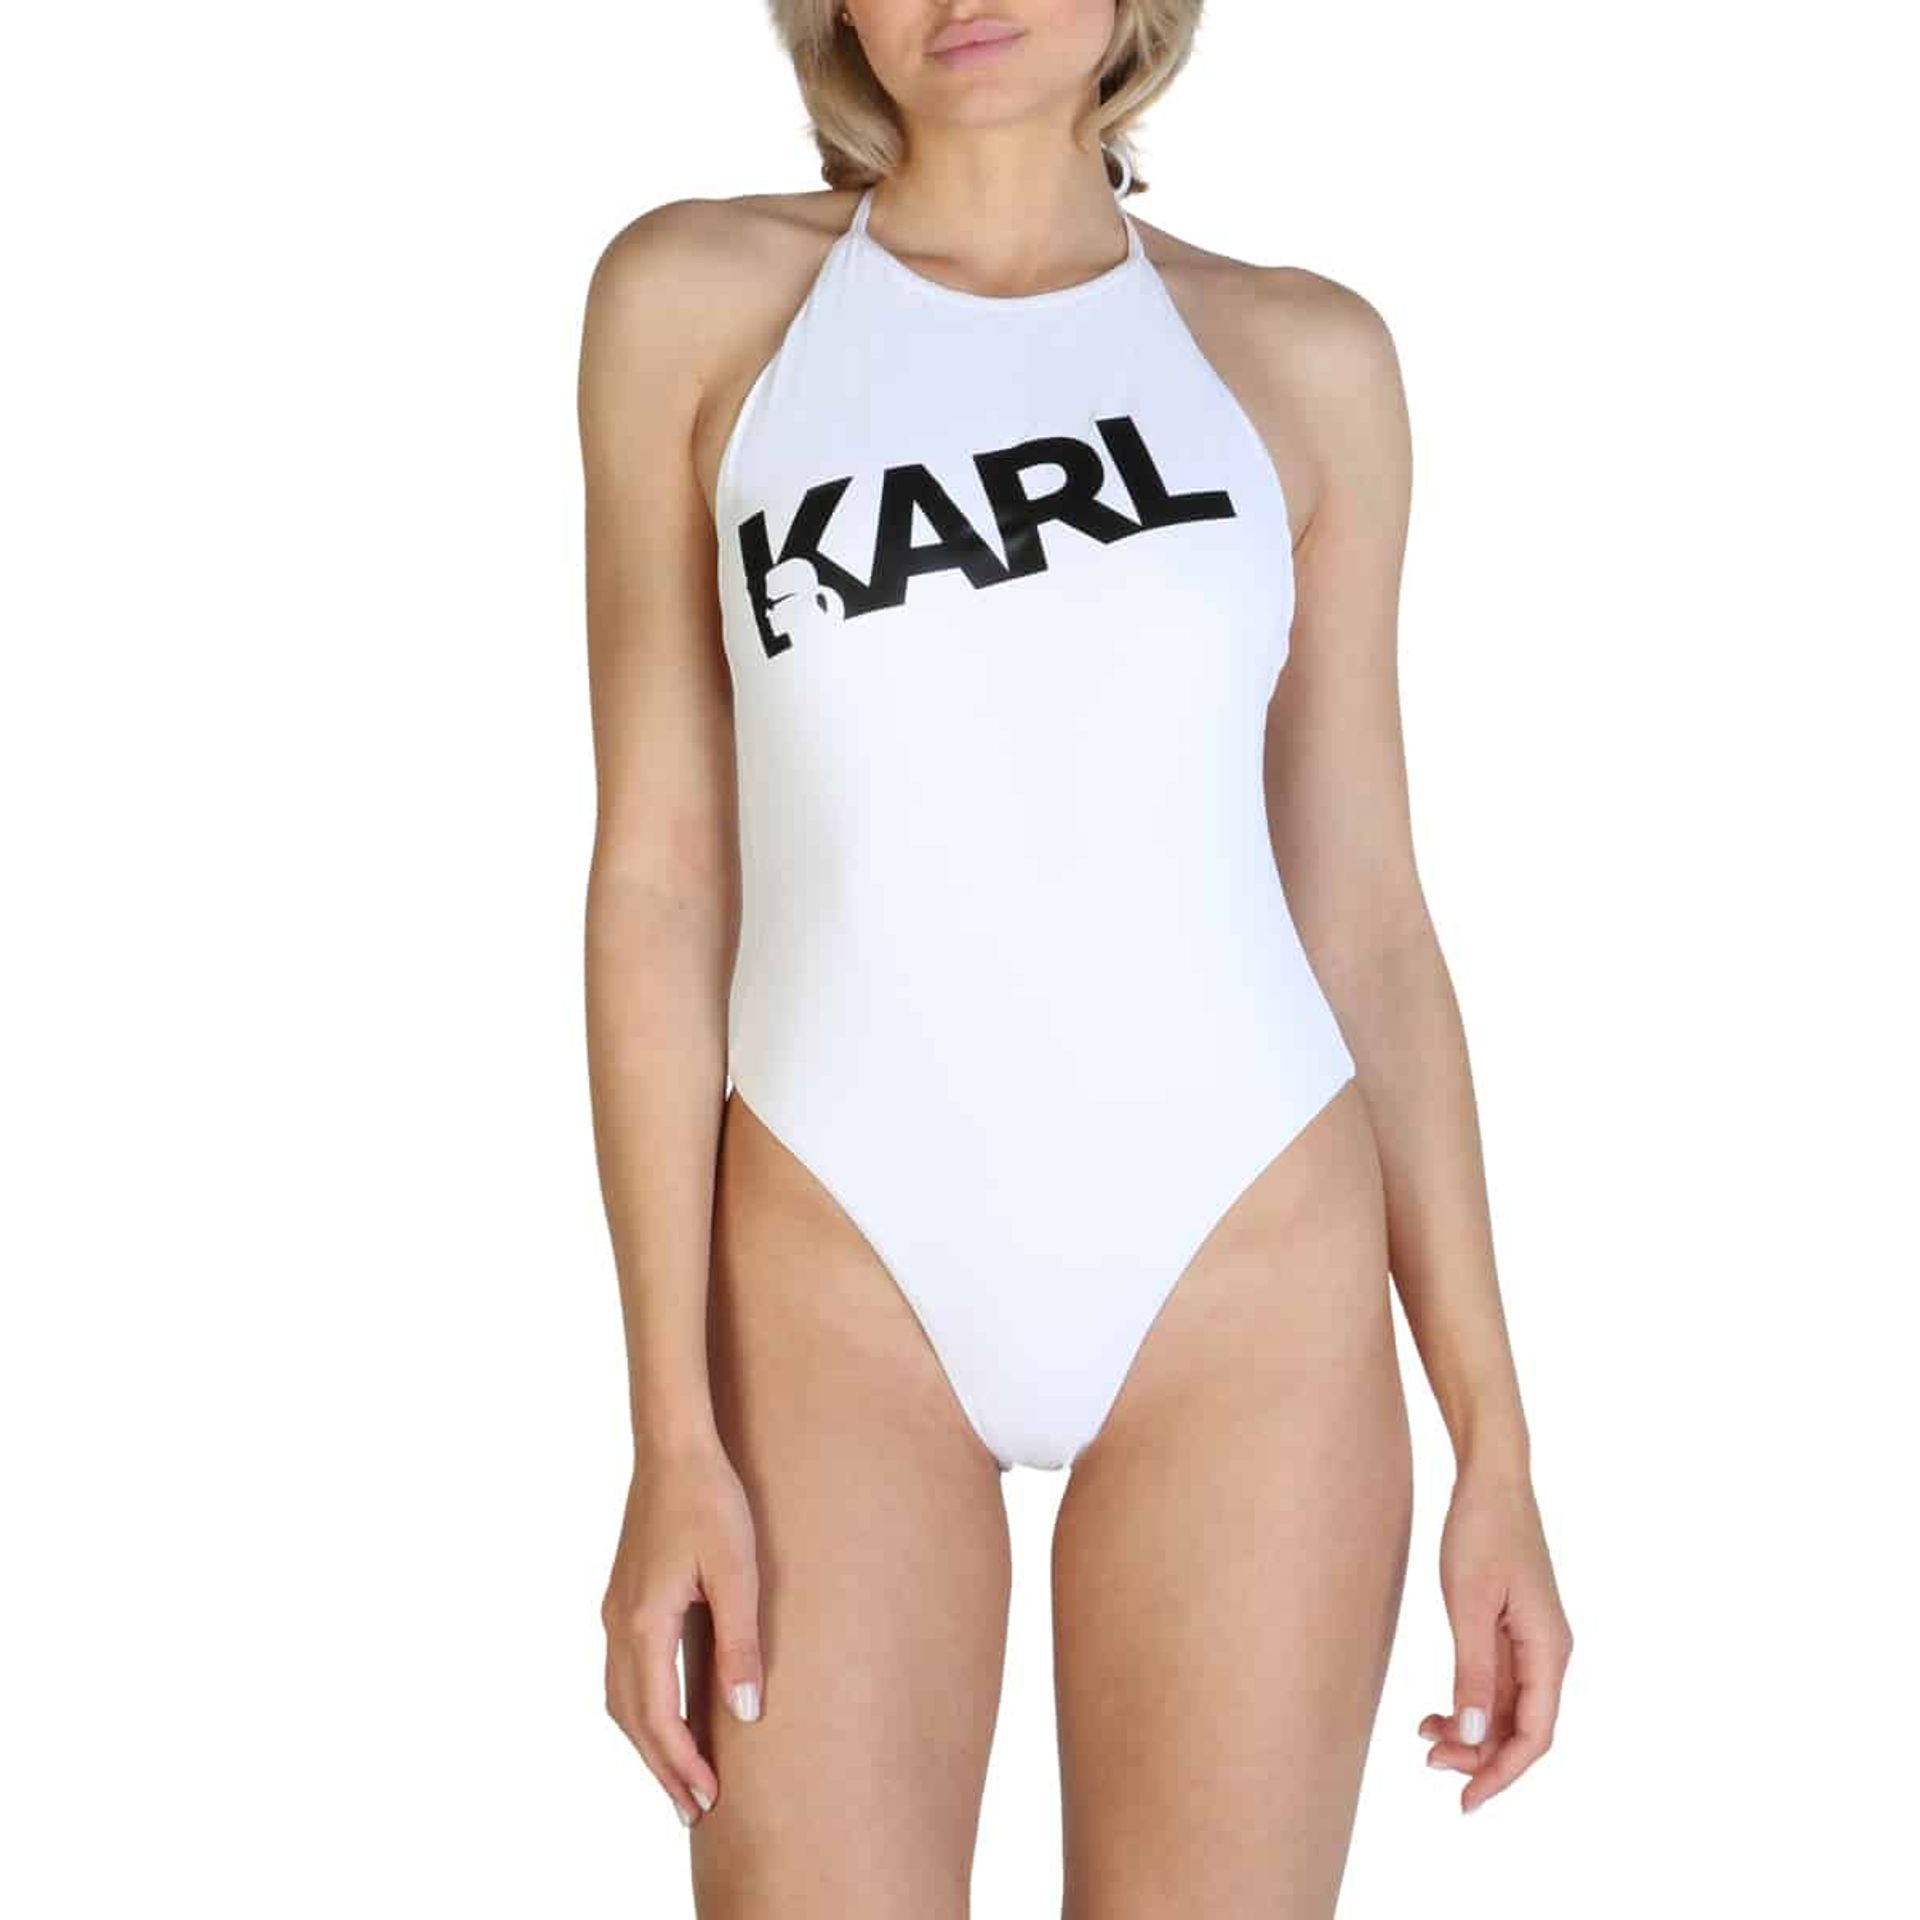 Karl Lagerfeld Swimwear